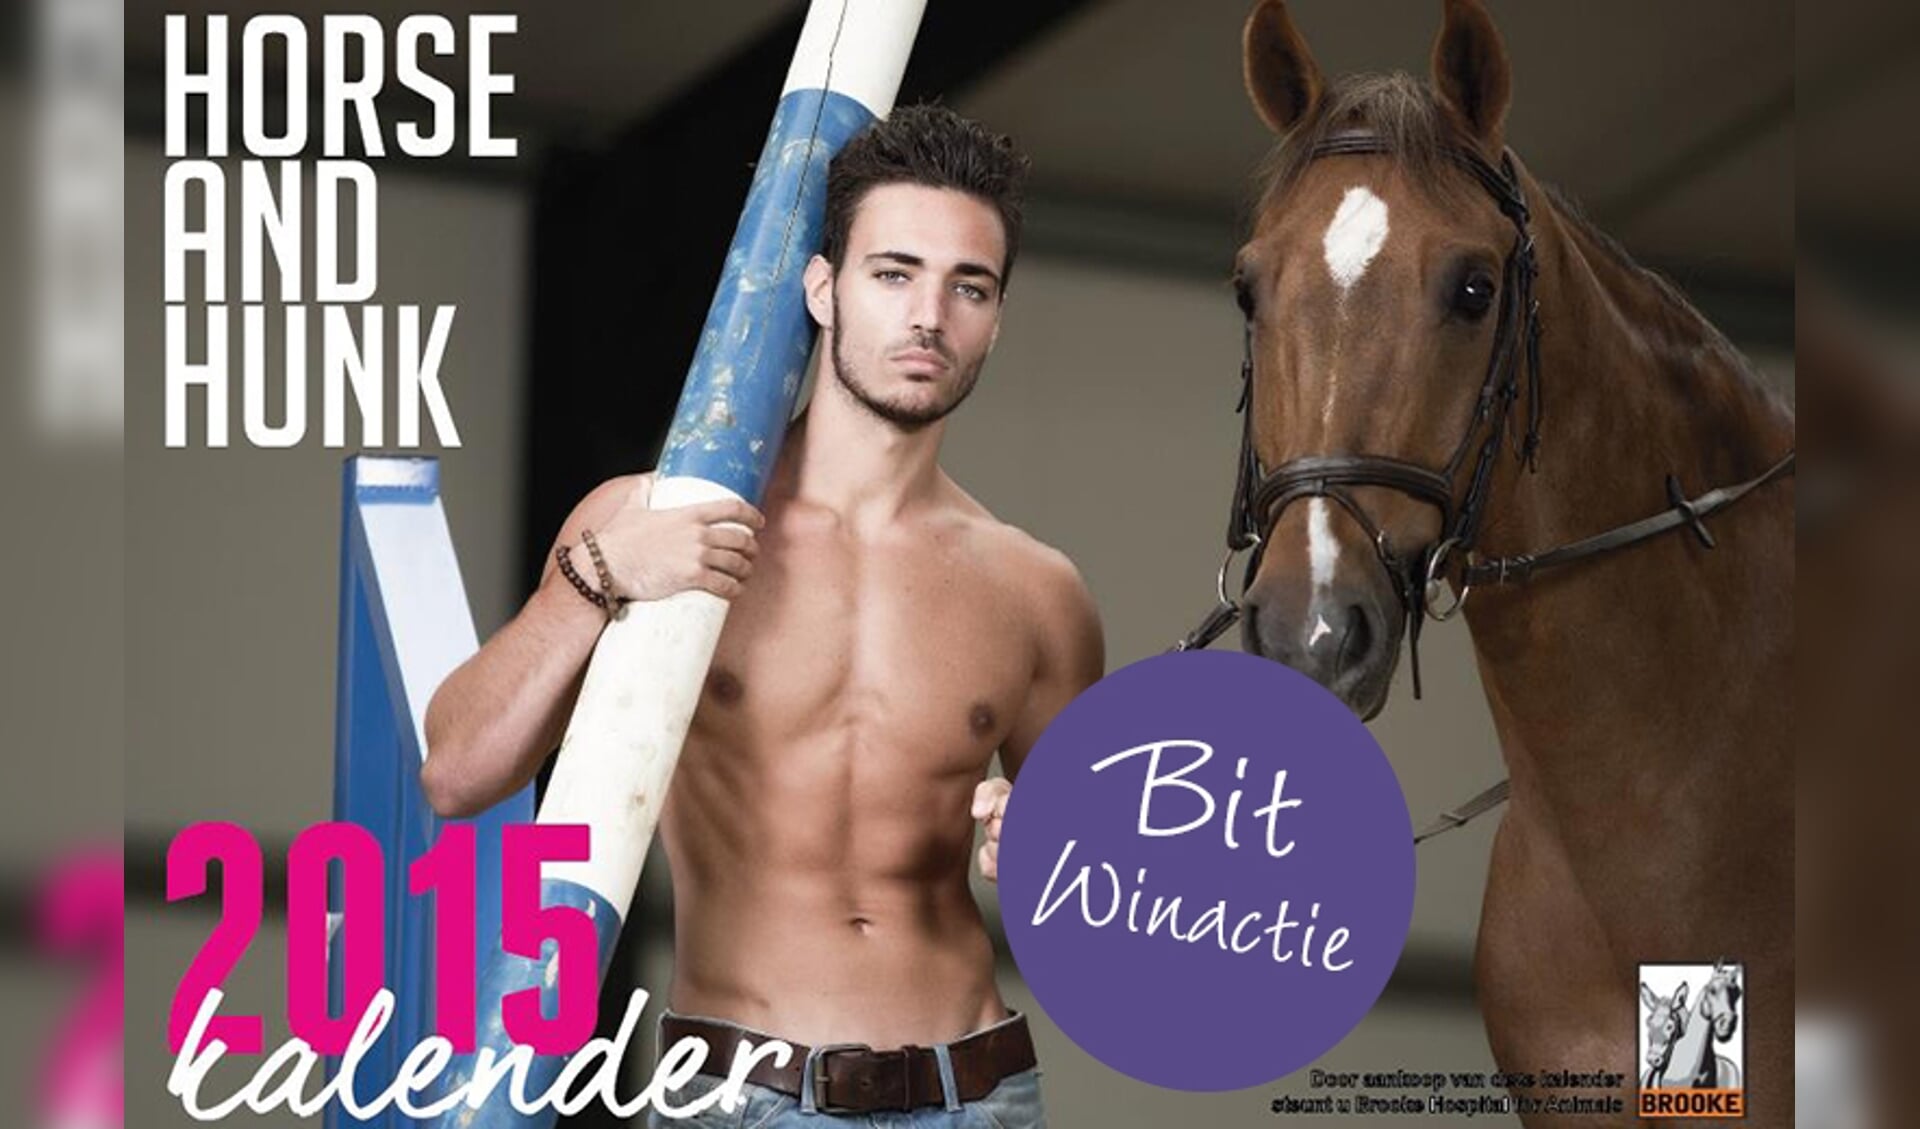 Horse and Hunk kalender 2015, bit, bit magazine, bit-winactie, brooke hospital for animals